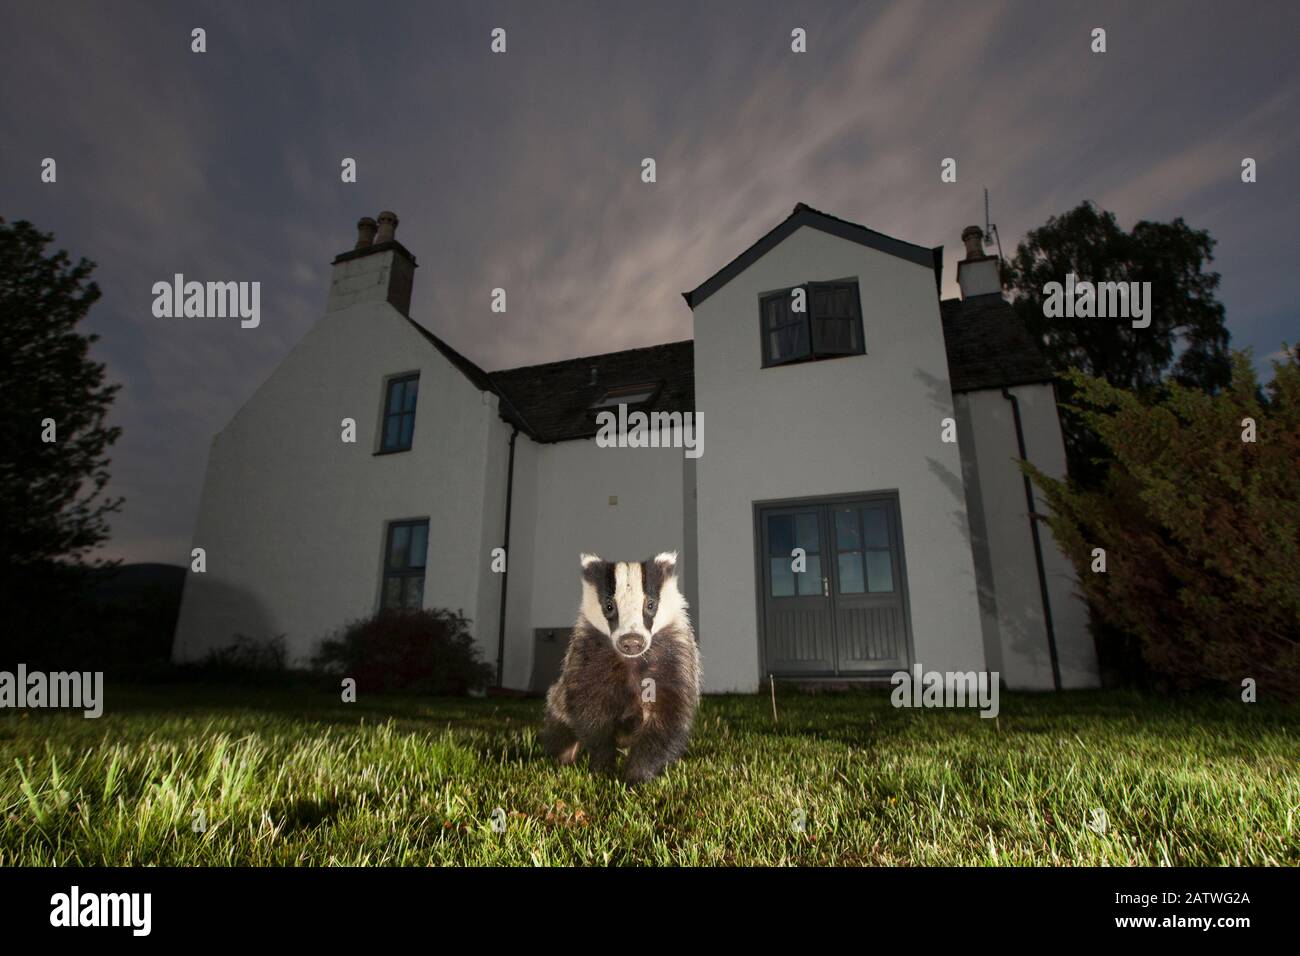 European badger (Meles meles) in front of house at night, Glenfeshie, Cairngorms National Park, Scotland, UK. Stock Photo